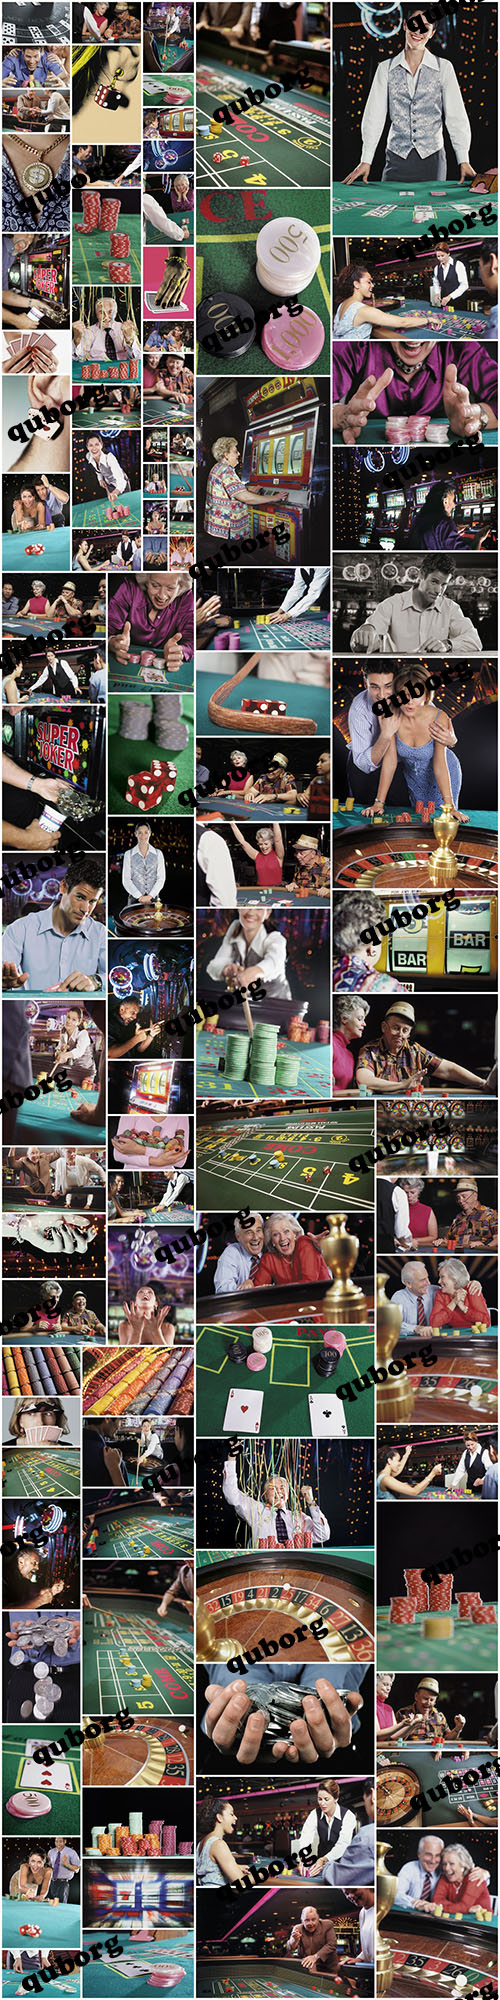 Stock Photos - Casino